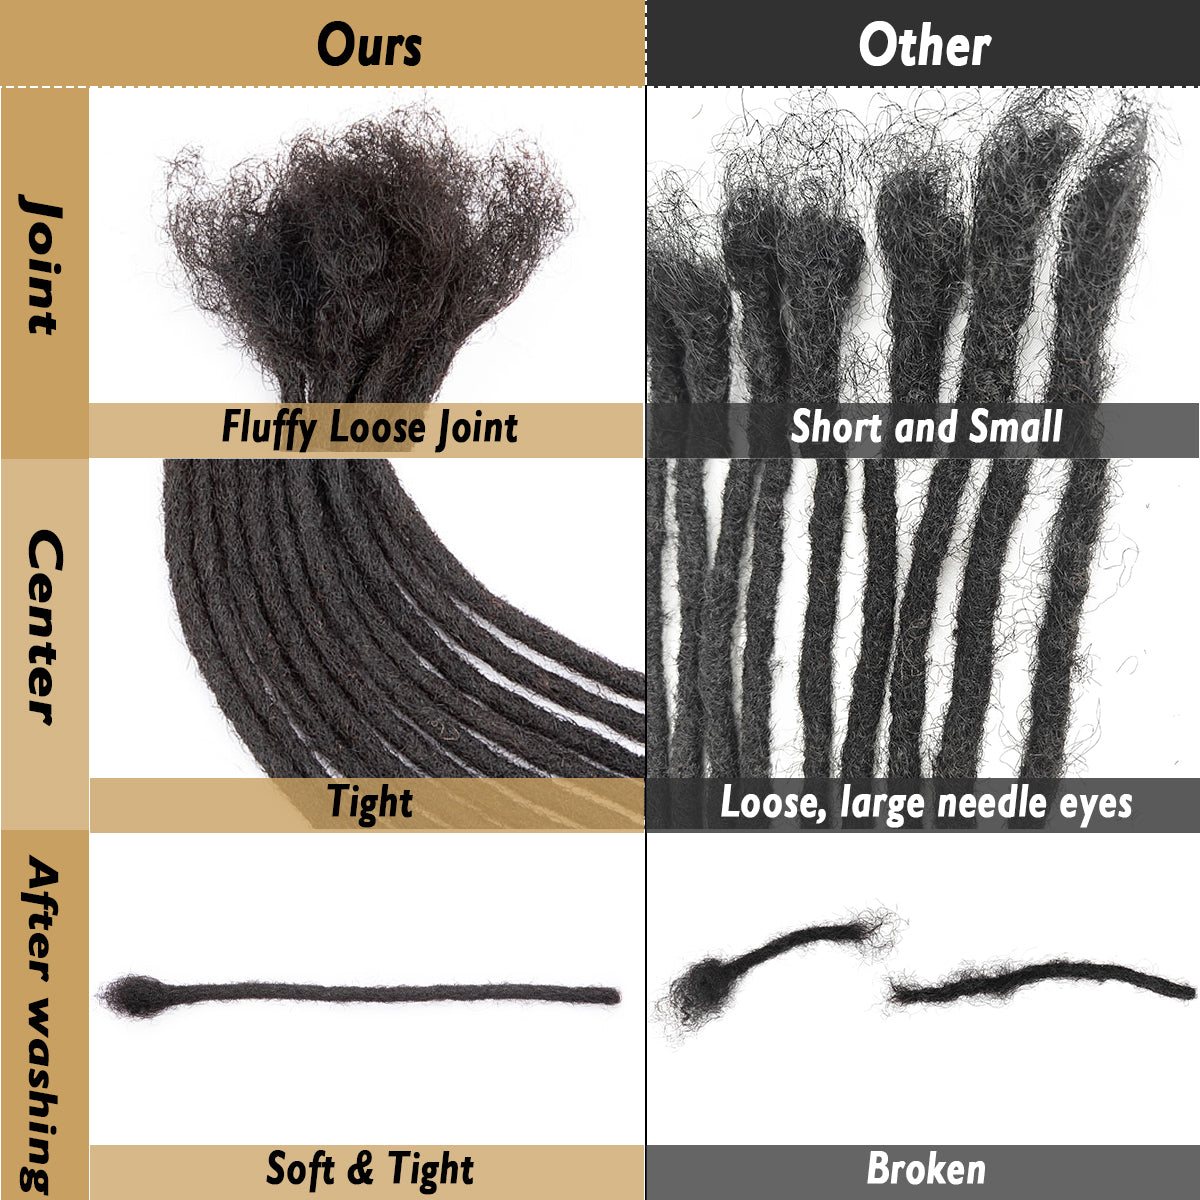 Extensions de dreadlocks de cheveux humains 4C Locs Dreads Extensions de cheveux 0,8 cm (6-18 pouces)